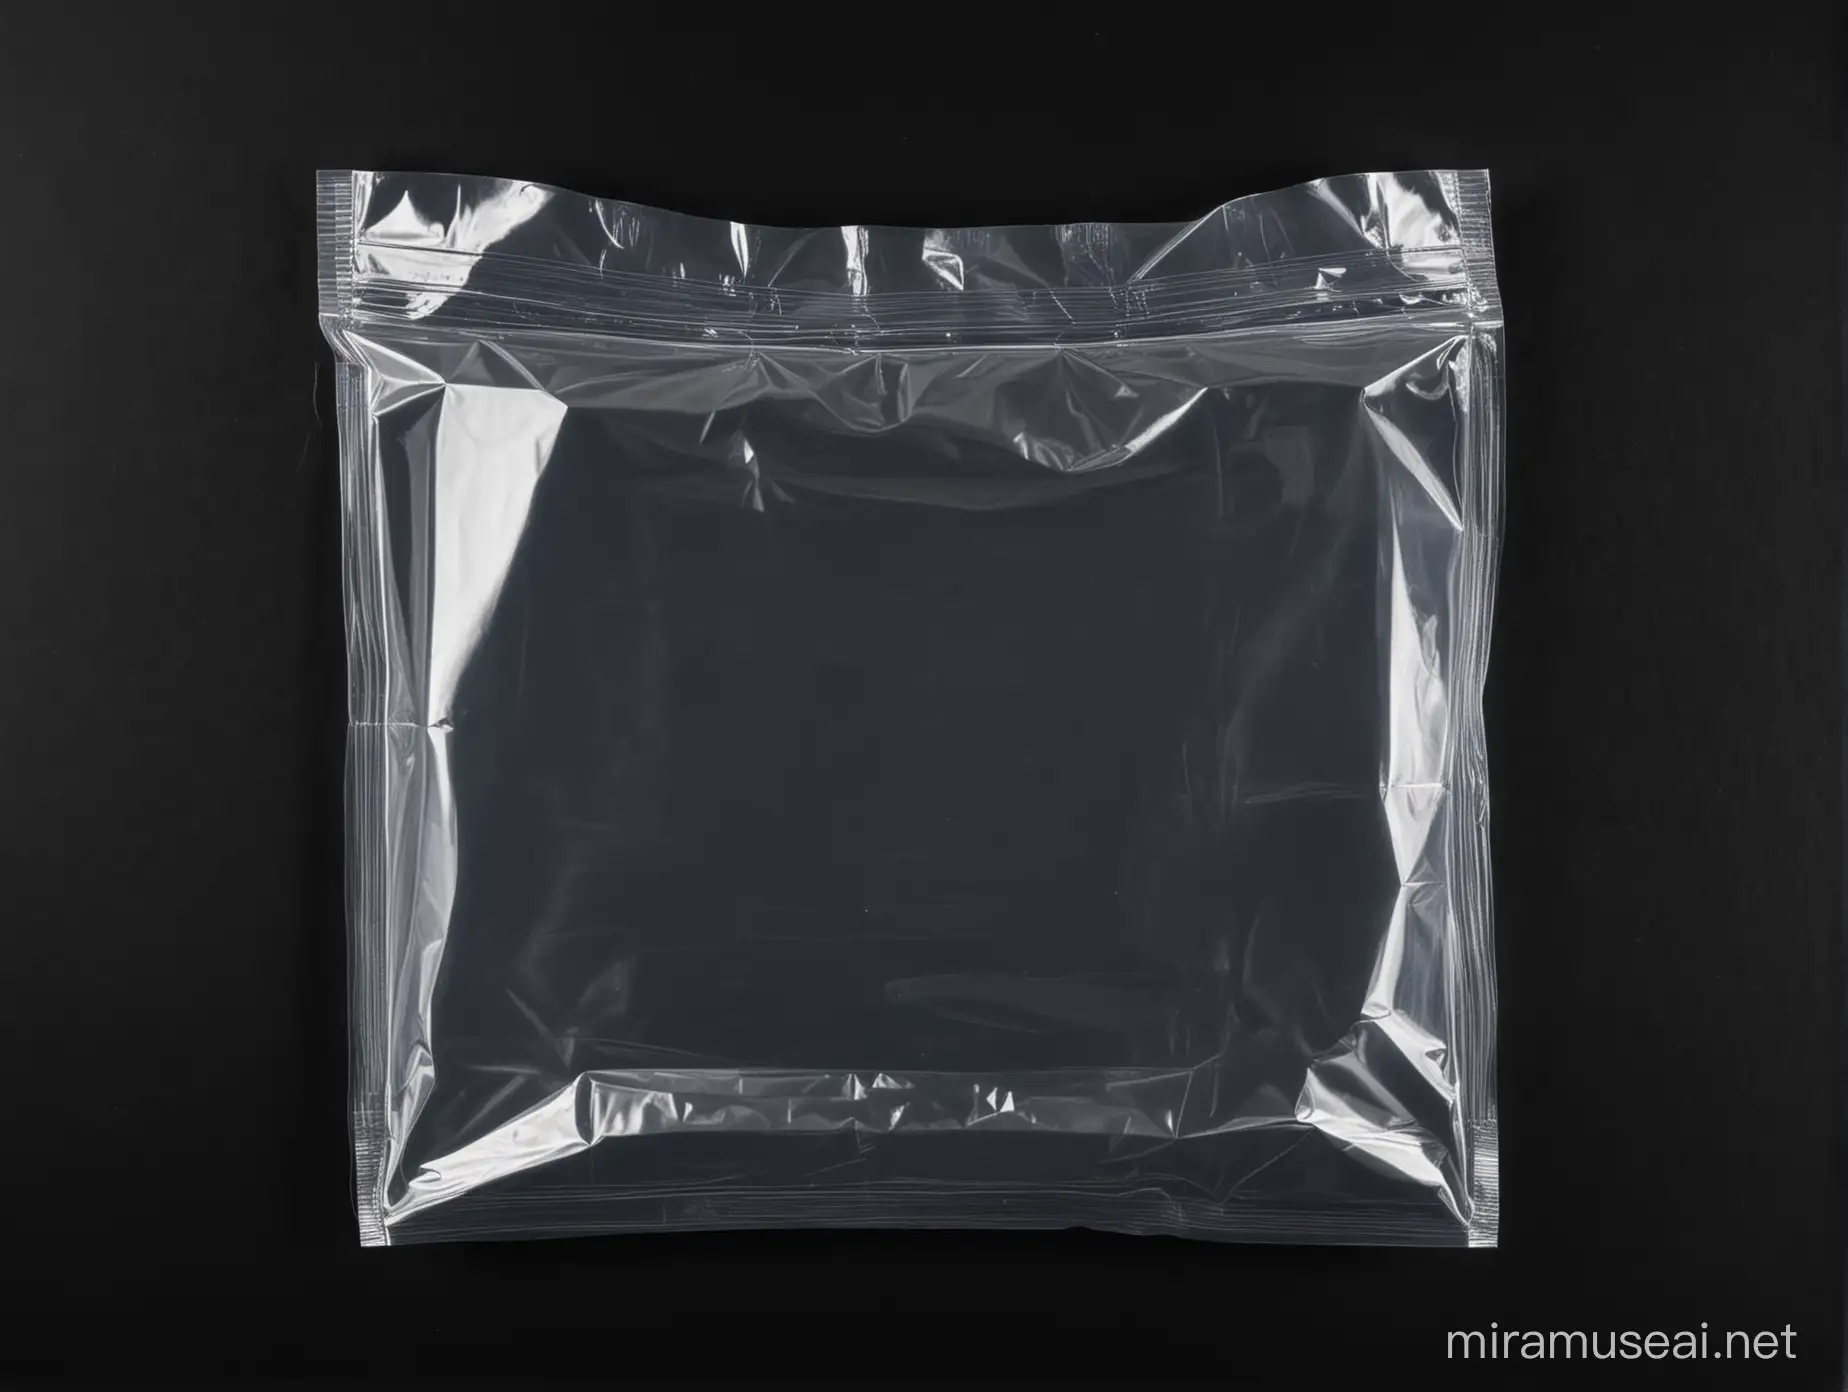 Transparent Plastic Bag on Dark Background